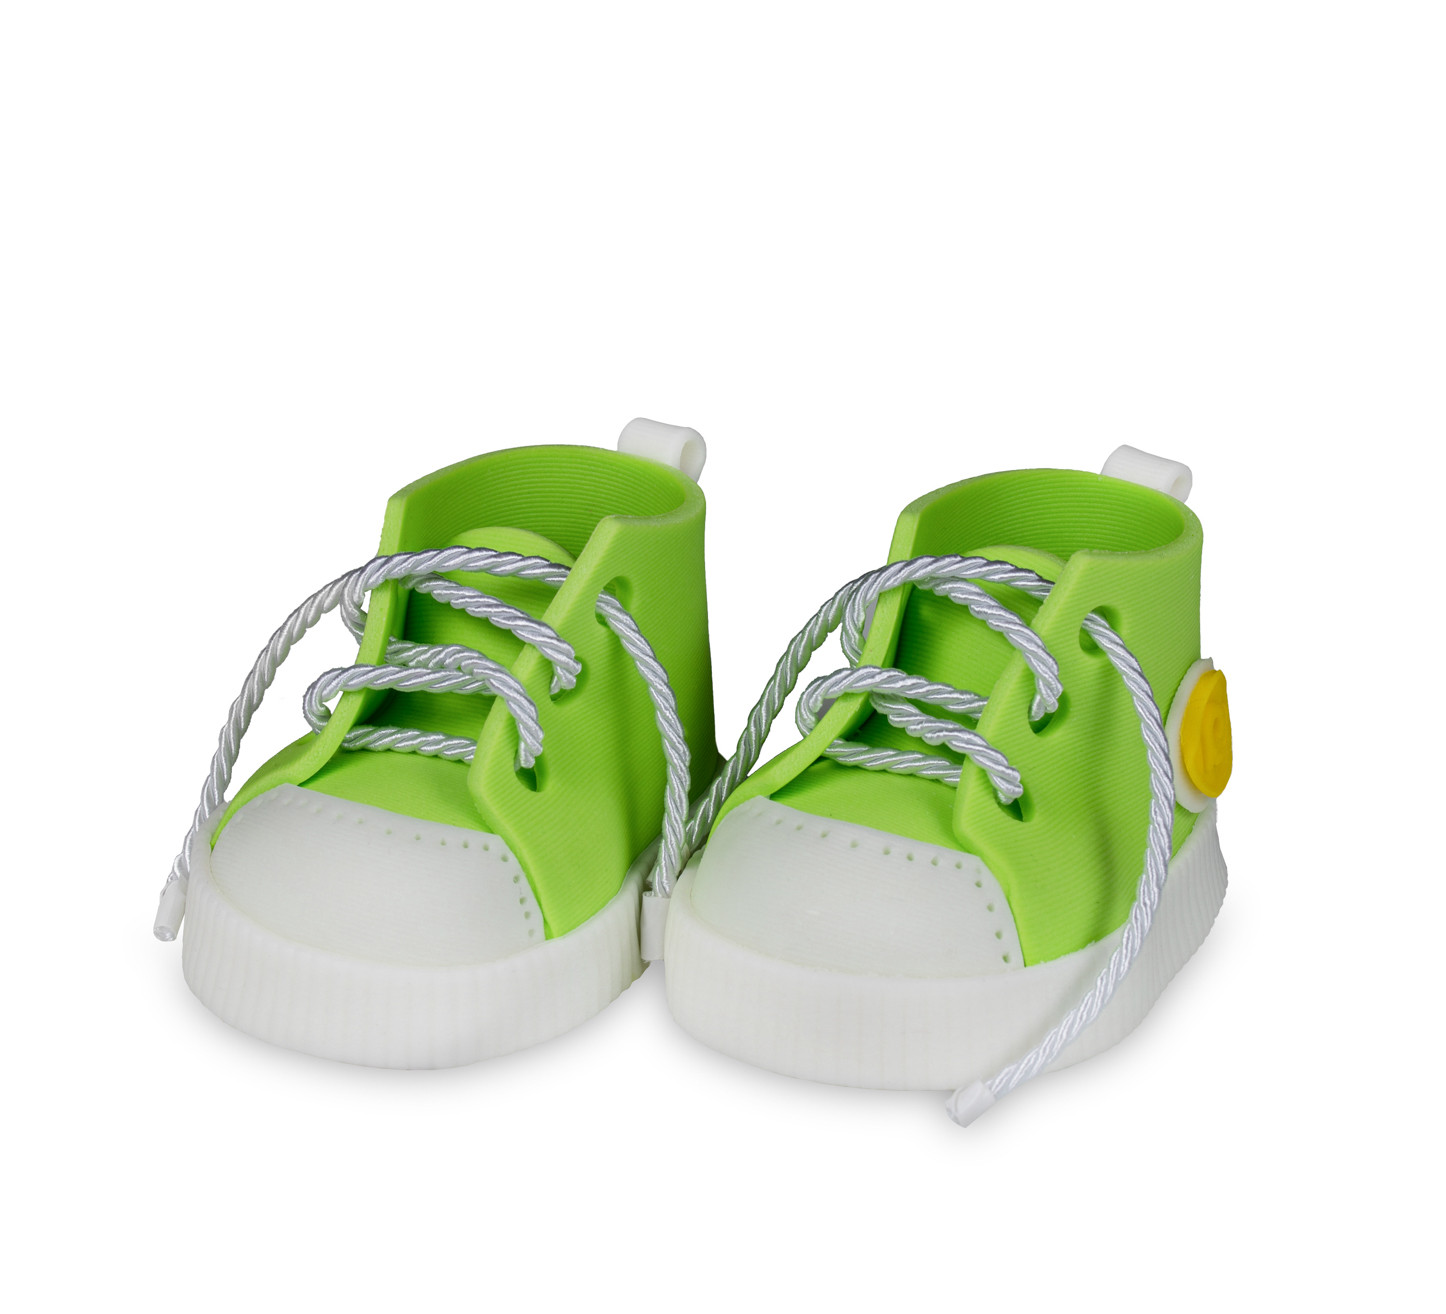 Decoratiuni din zahar - Pantofi sport fistic 013012 PJT 1 pereche